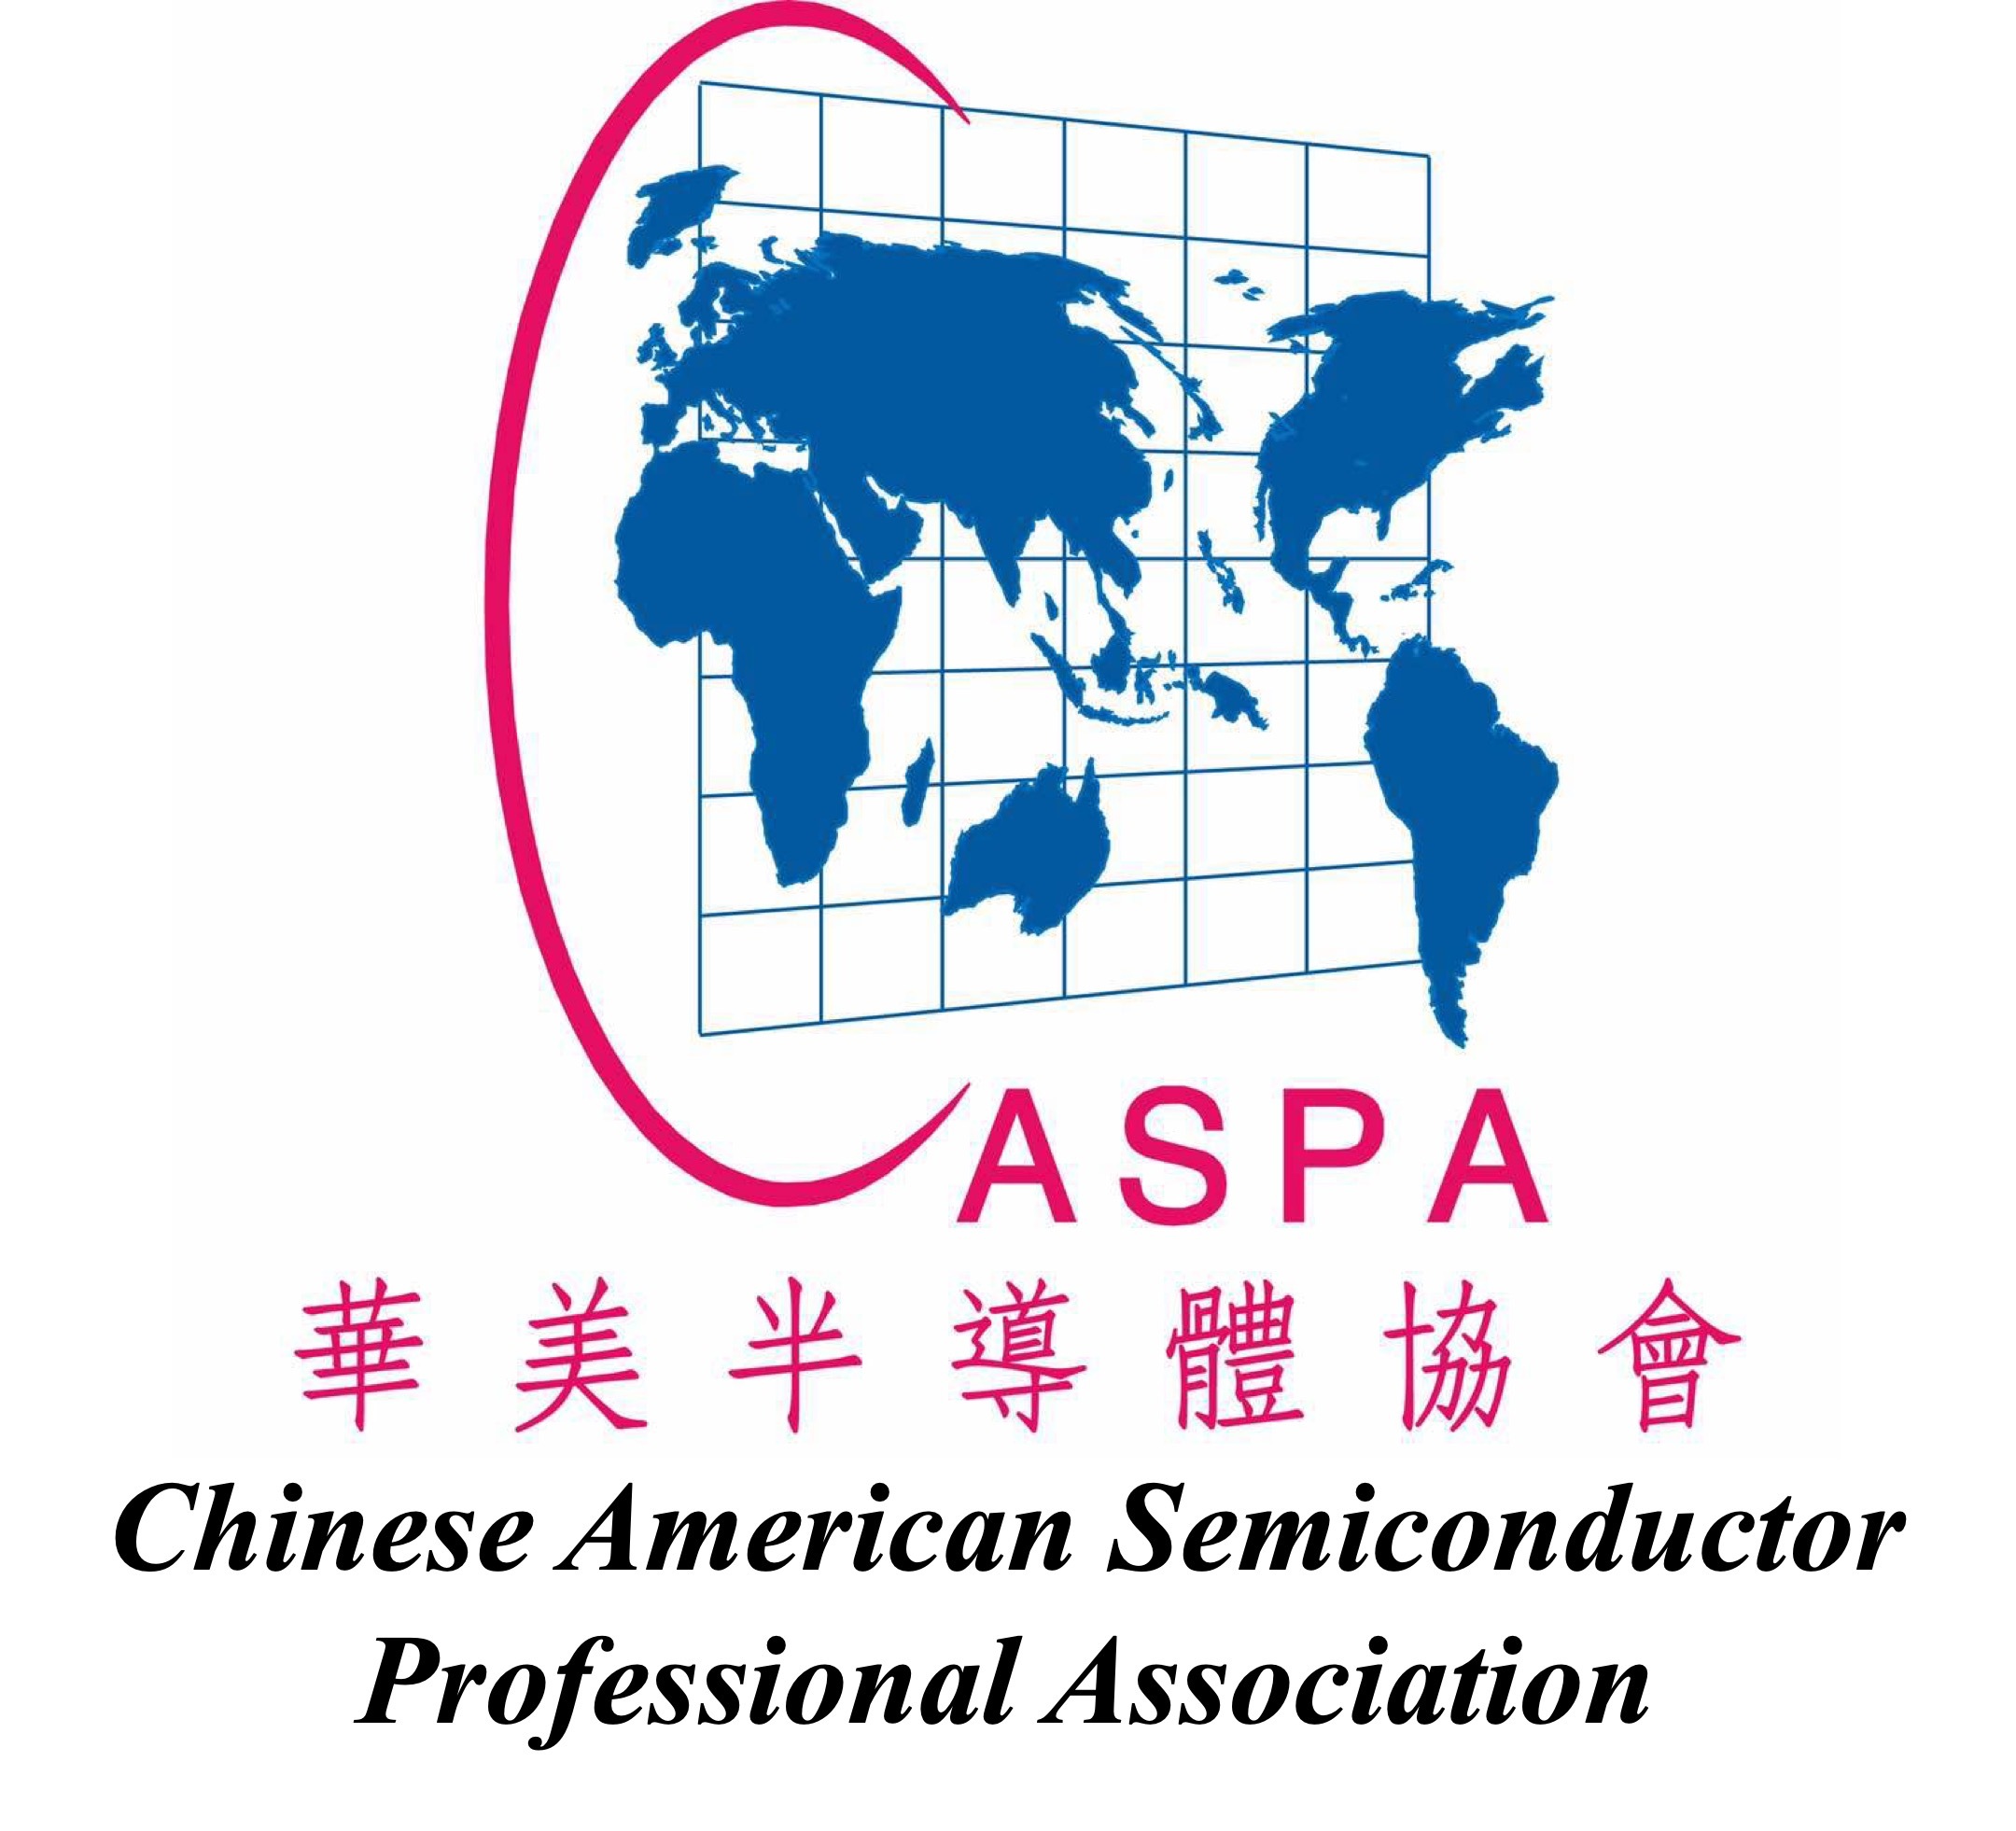 Chinese American Semiconductor Professional Organization